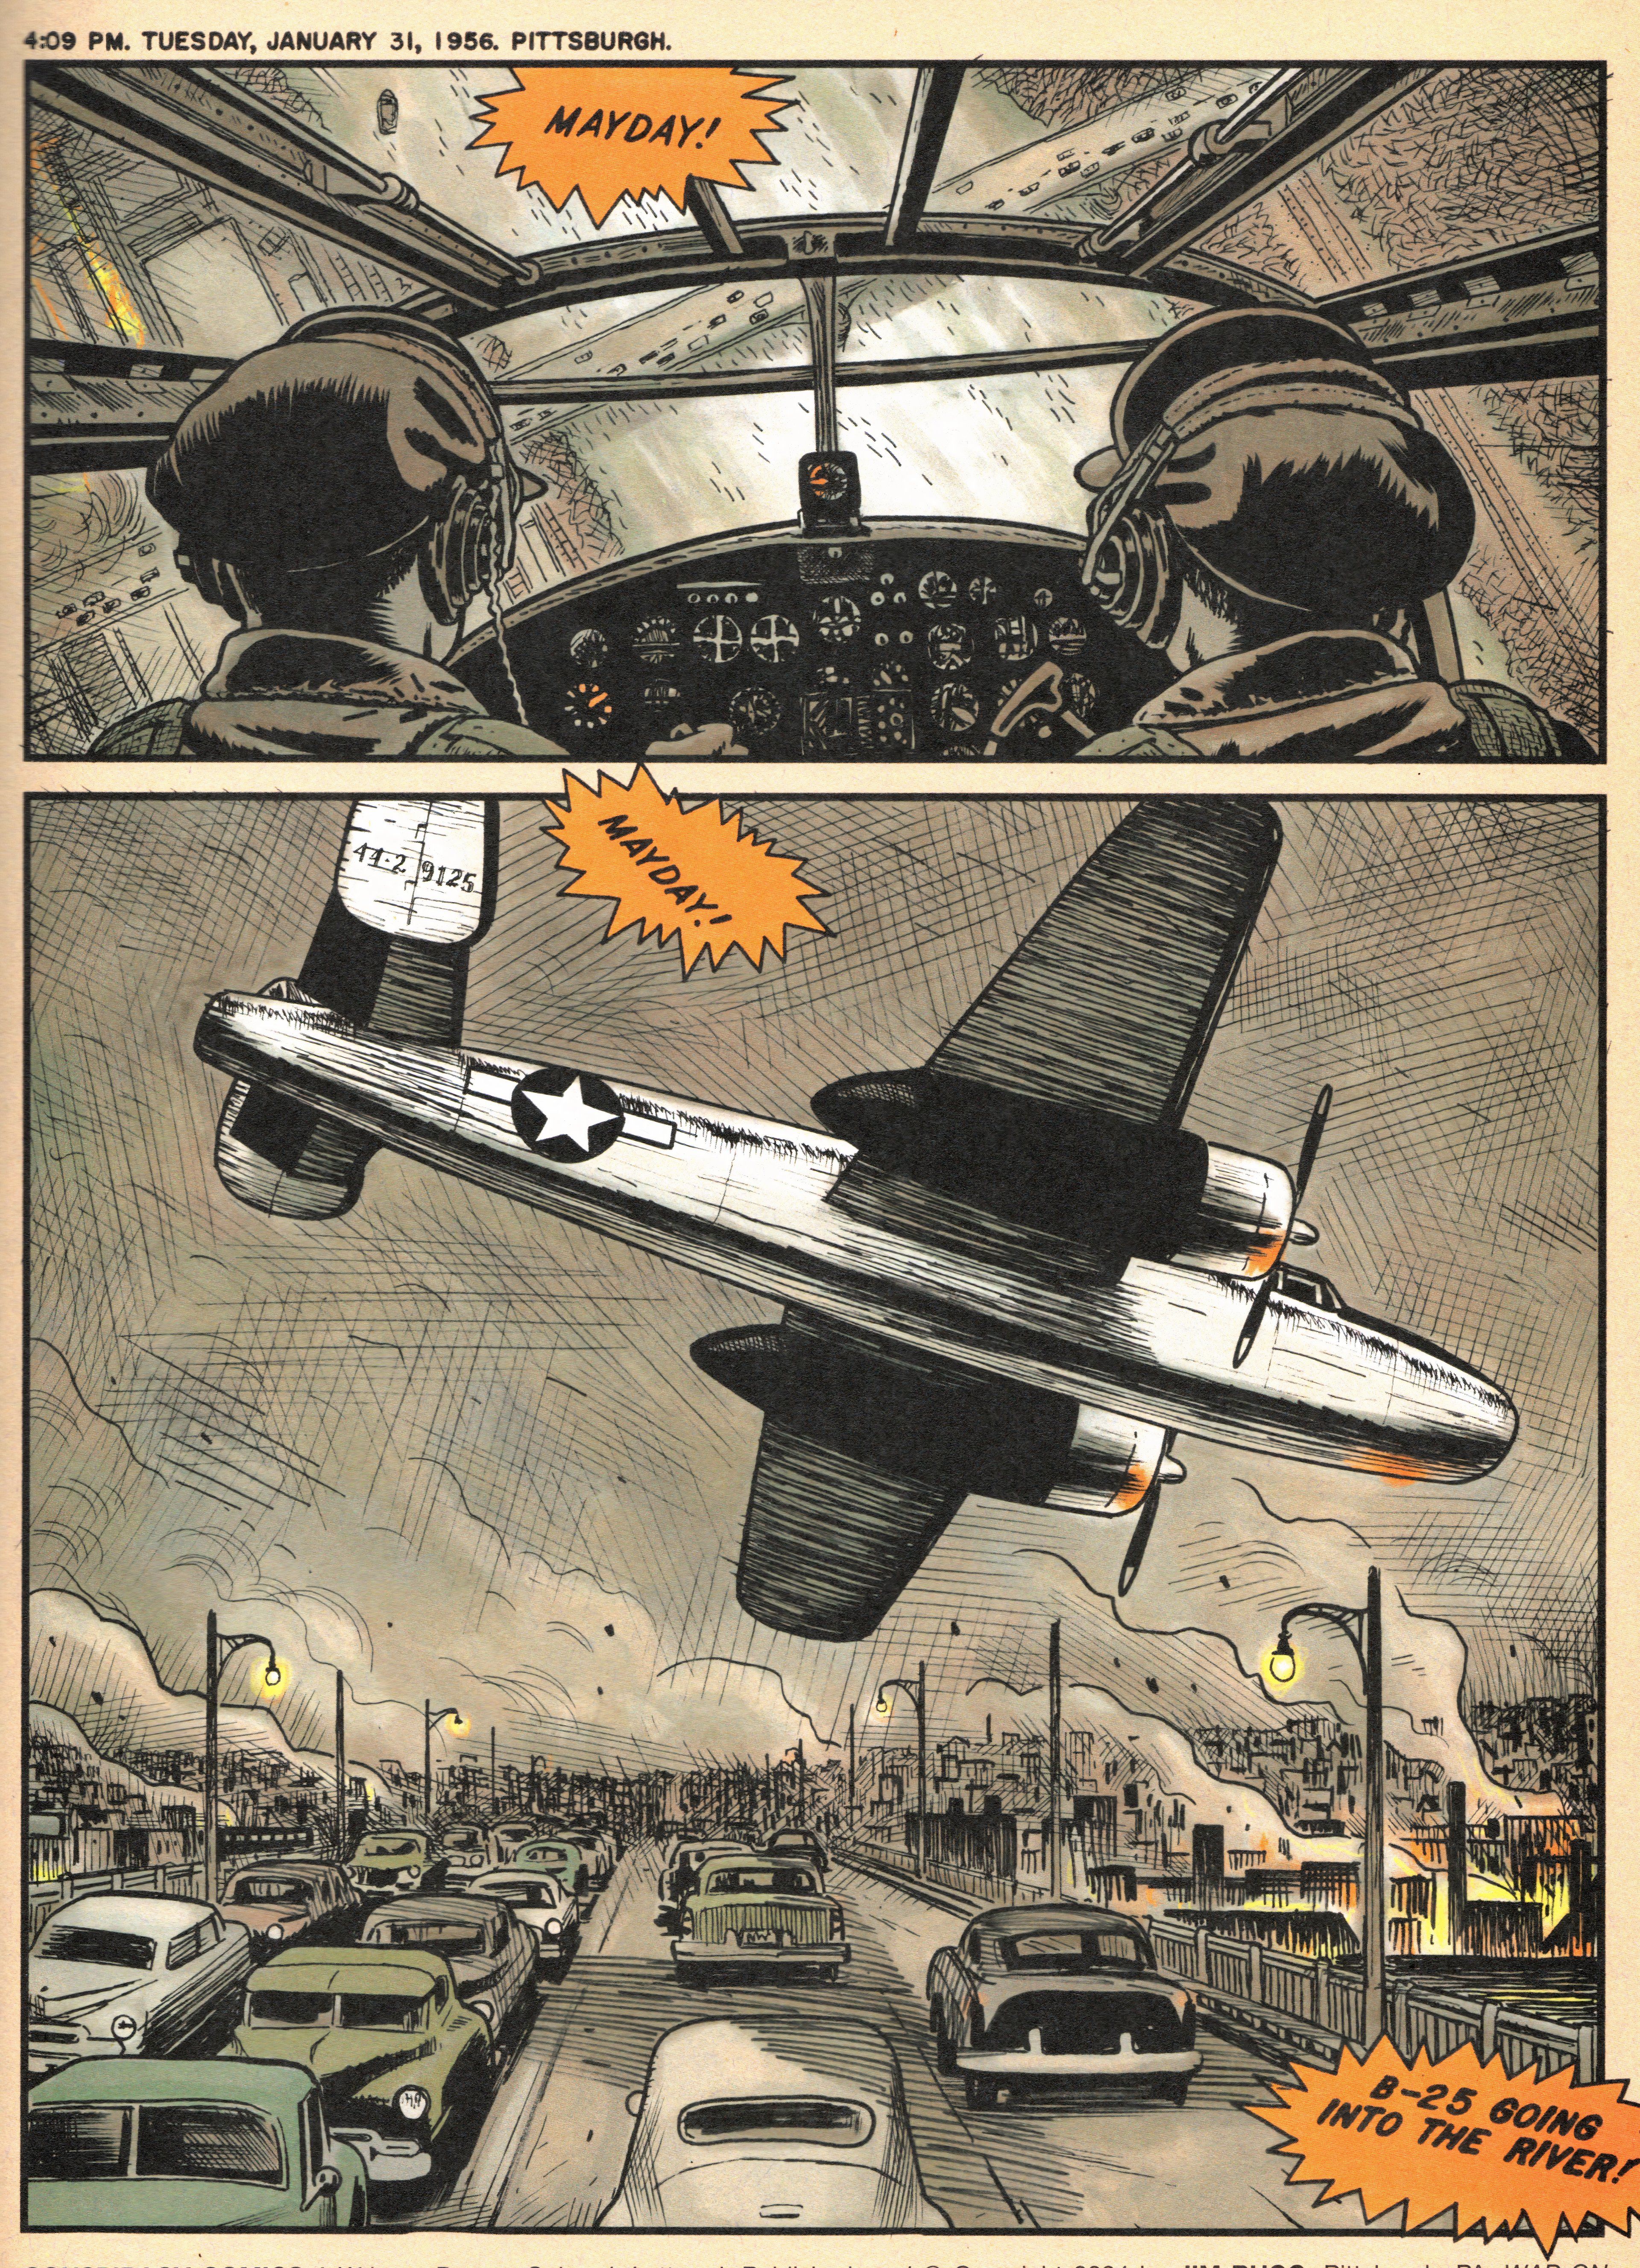 Conspiracy Comics #1 B52 plane crashes into Pittsburgh River